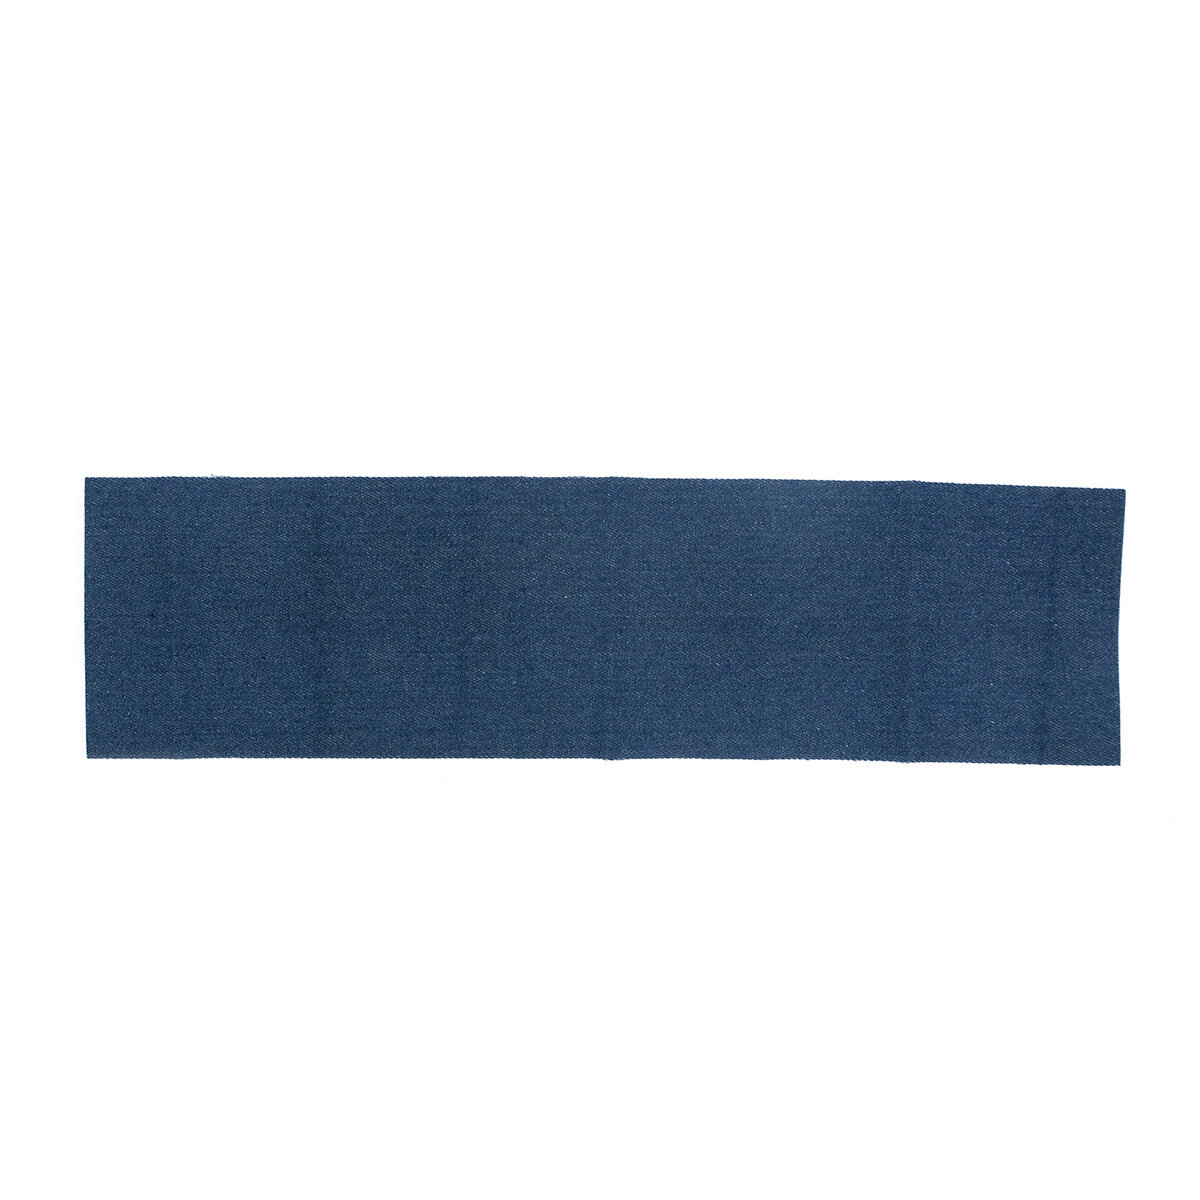 929550 Ткань джинсовая термоклеевая для заплаток 12*45см, темно-синий цвет, Prym